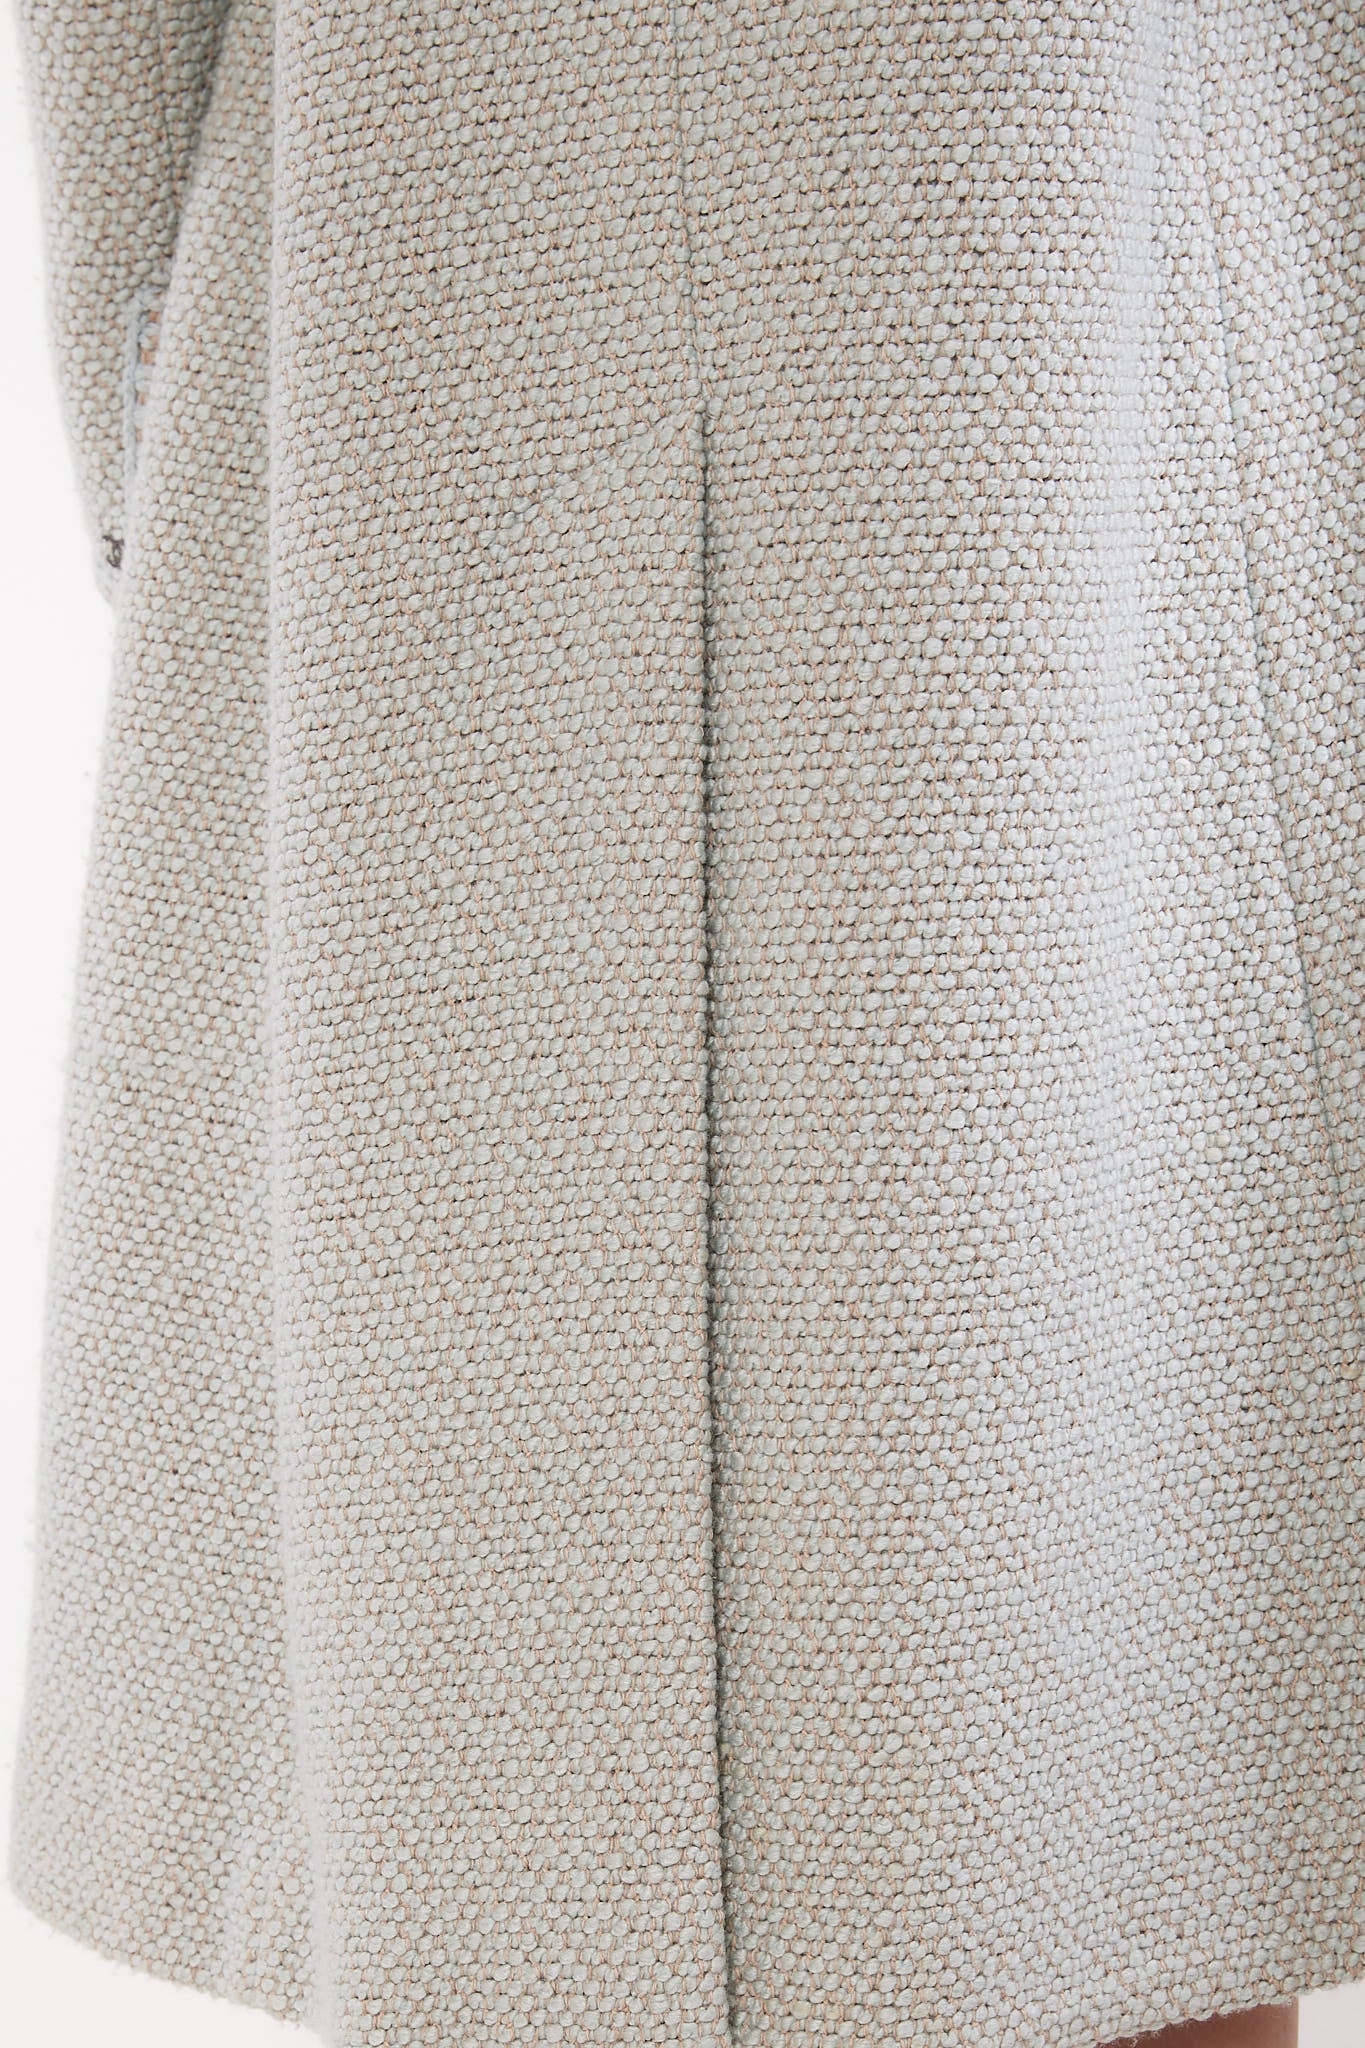 Chanel <br> F/W 2000 runway tweed coat, silk dress & belt ensemble